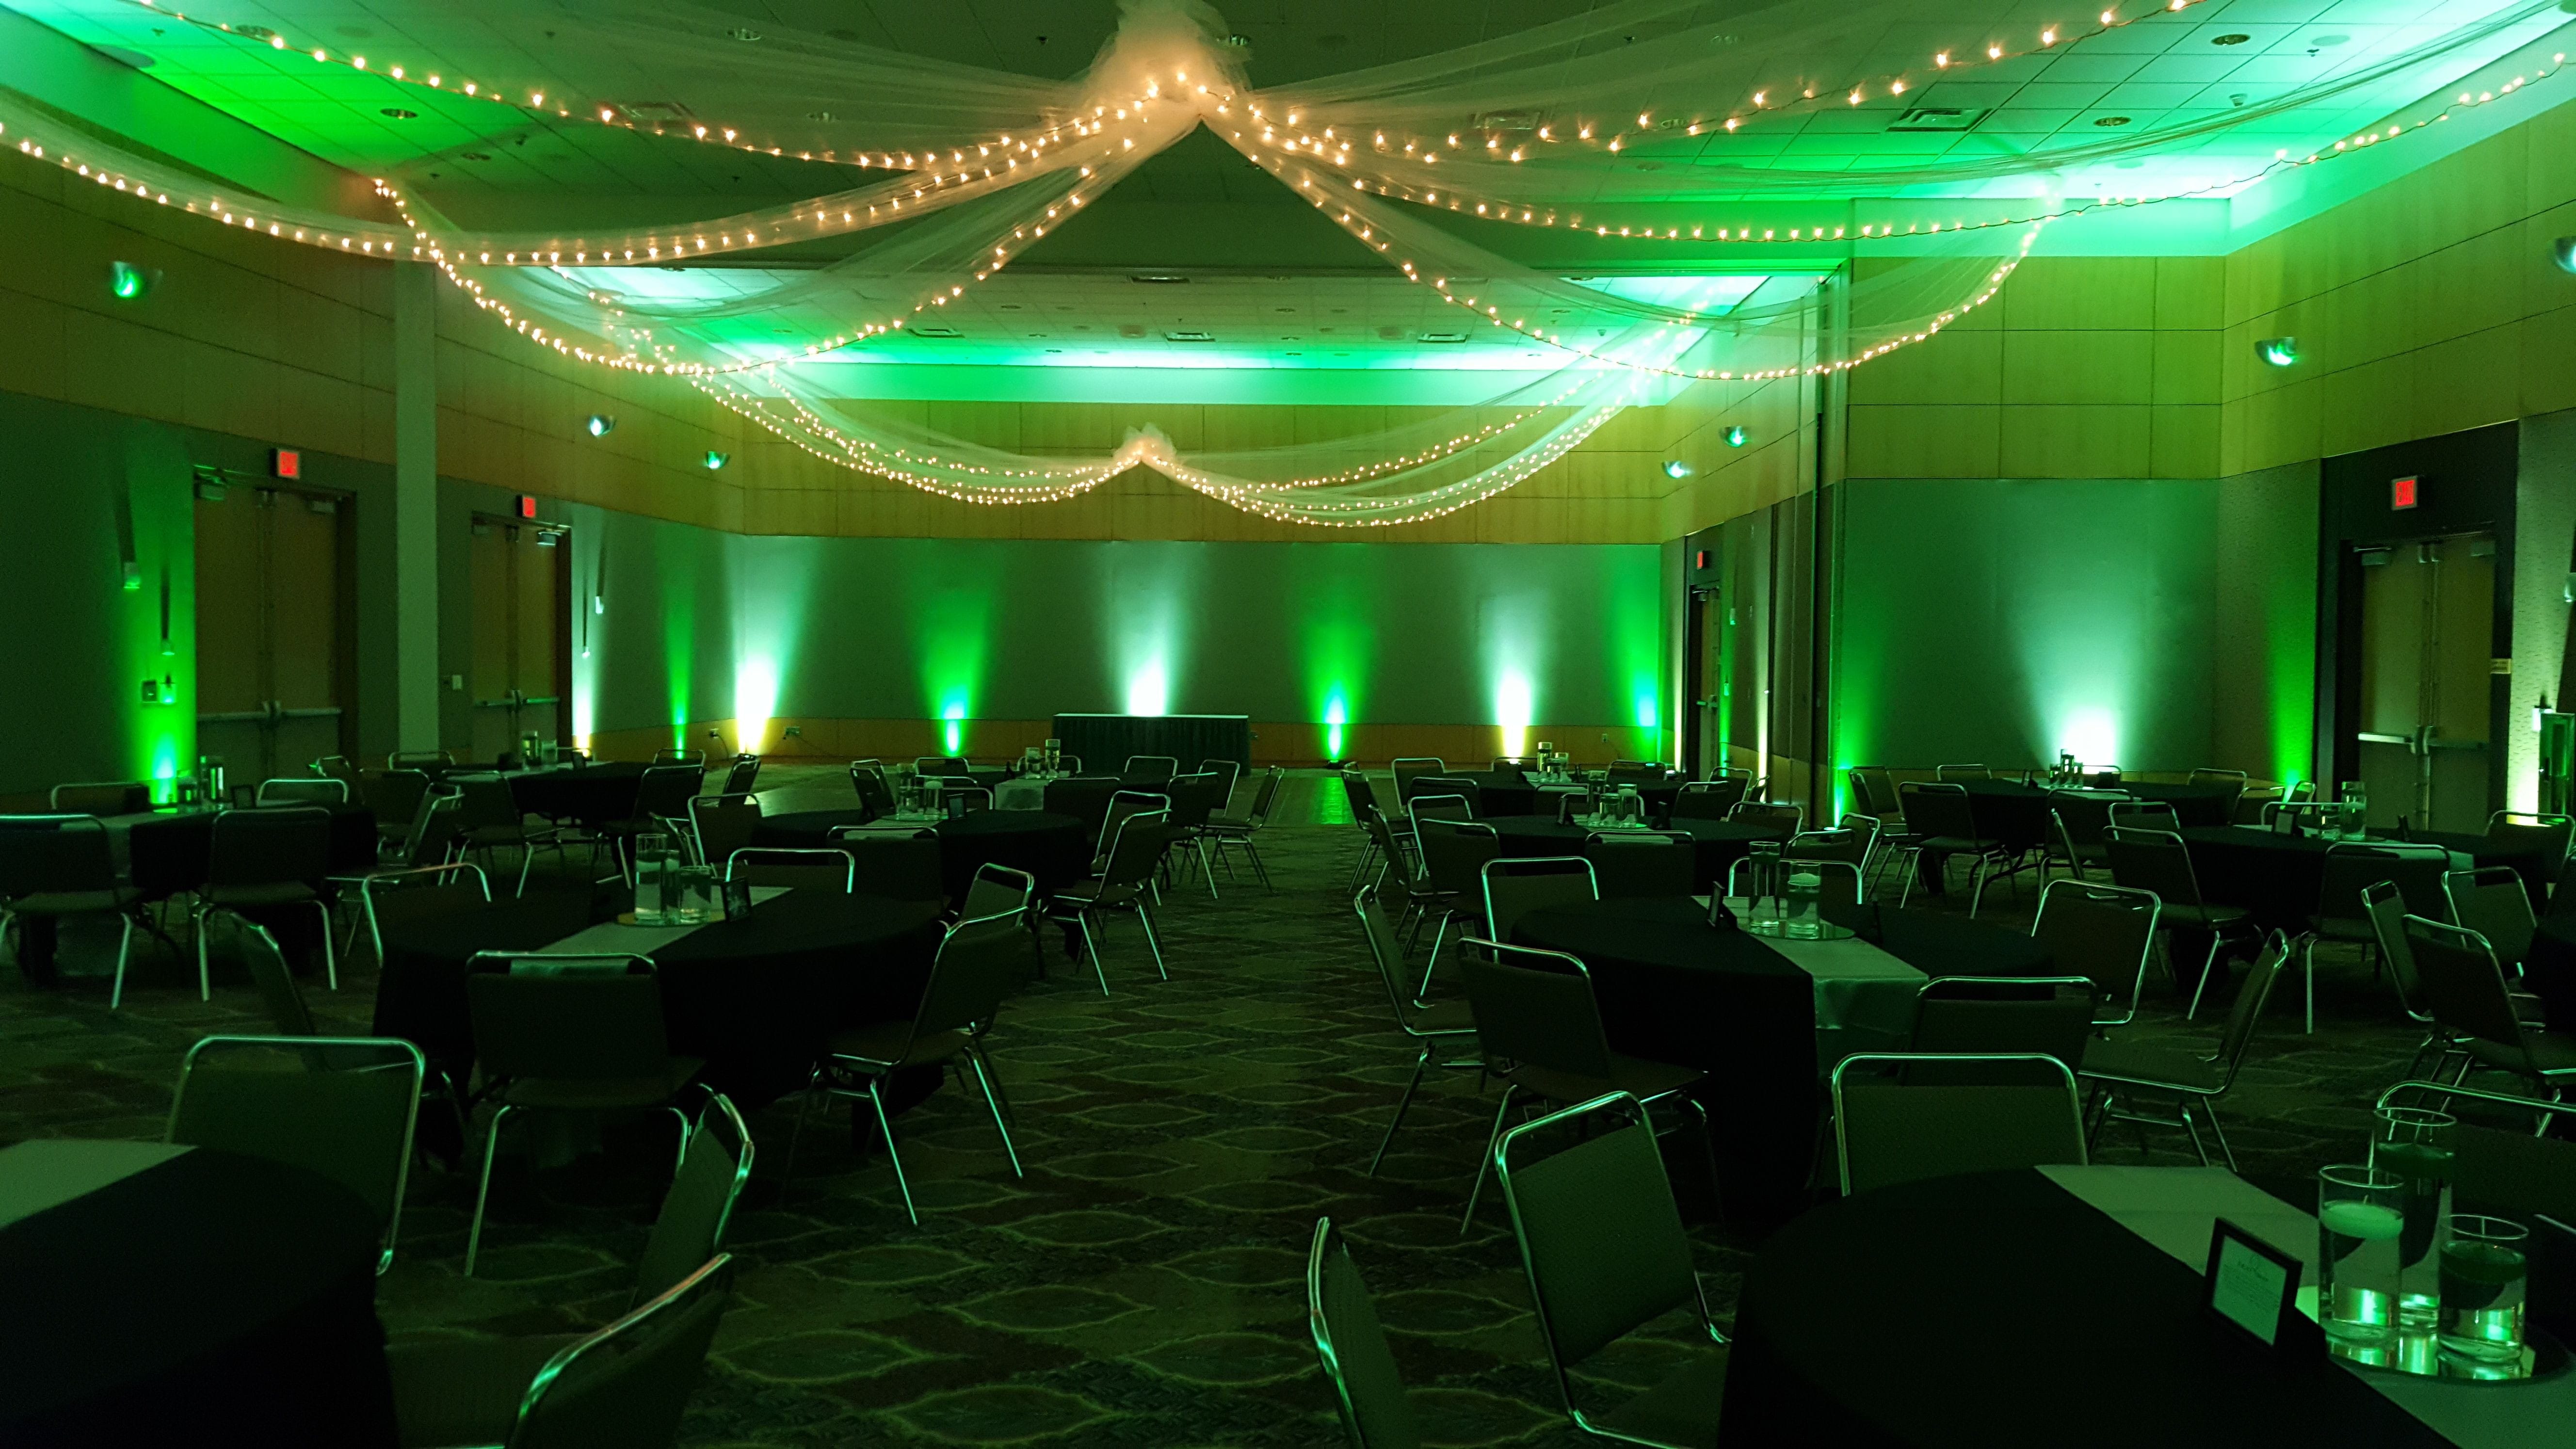 DECC, Horizon Room.
Two tone green up lighting.